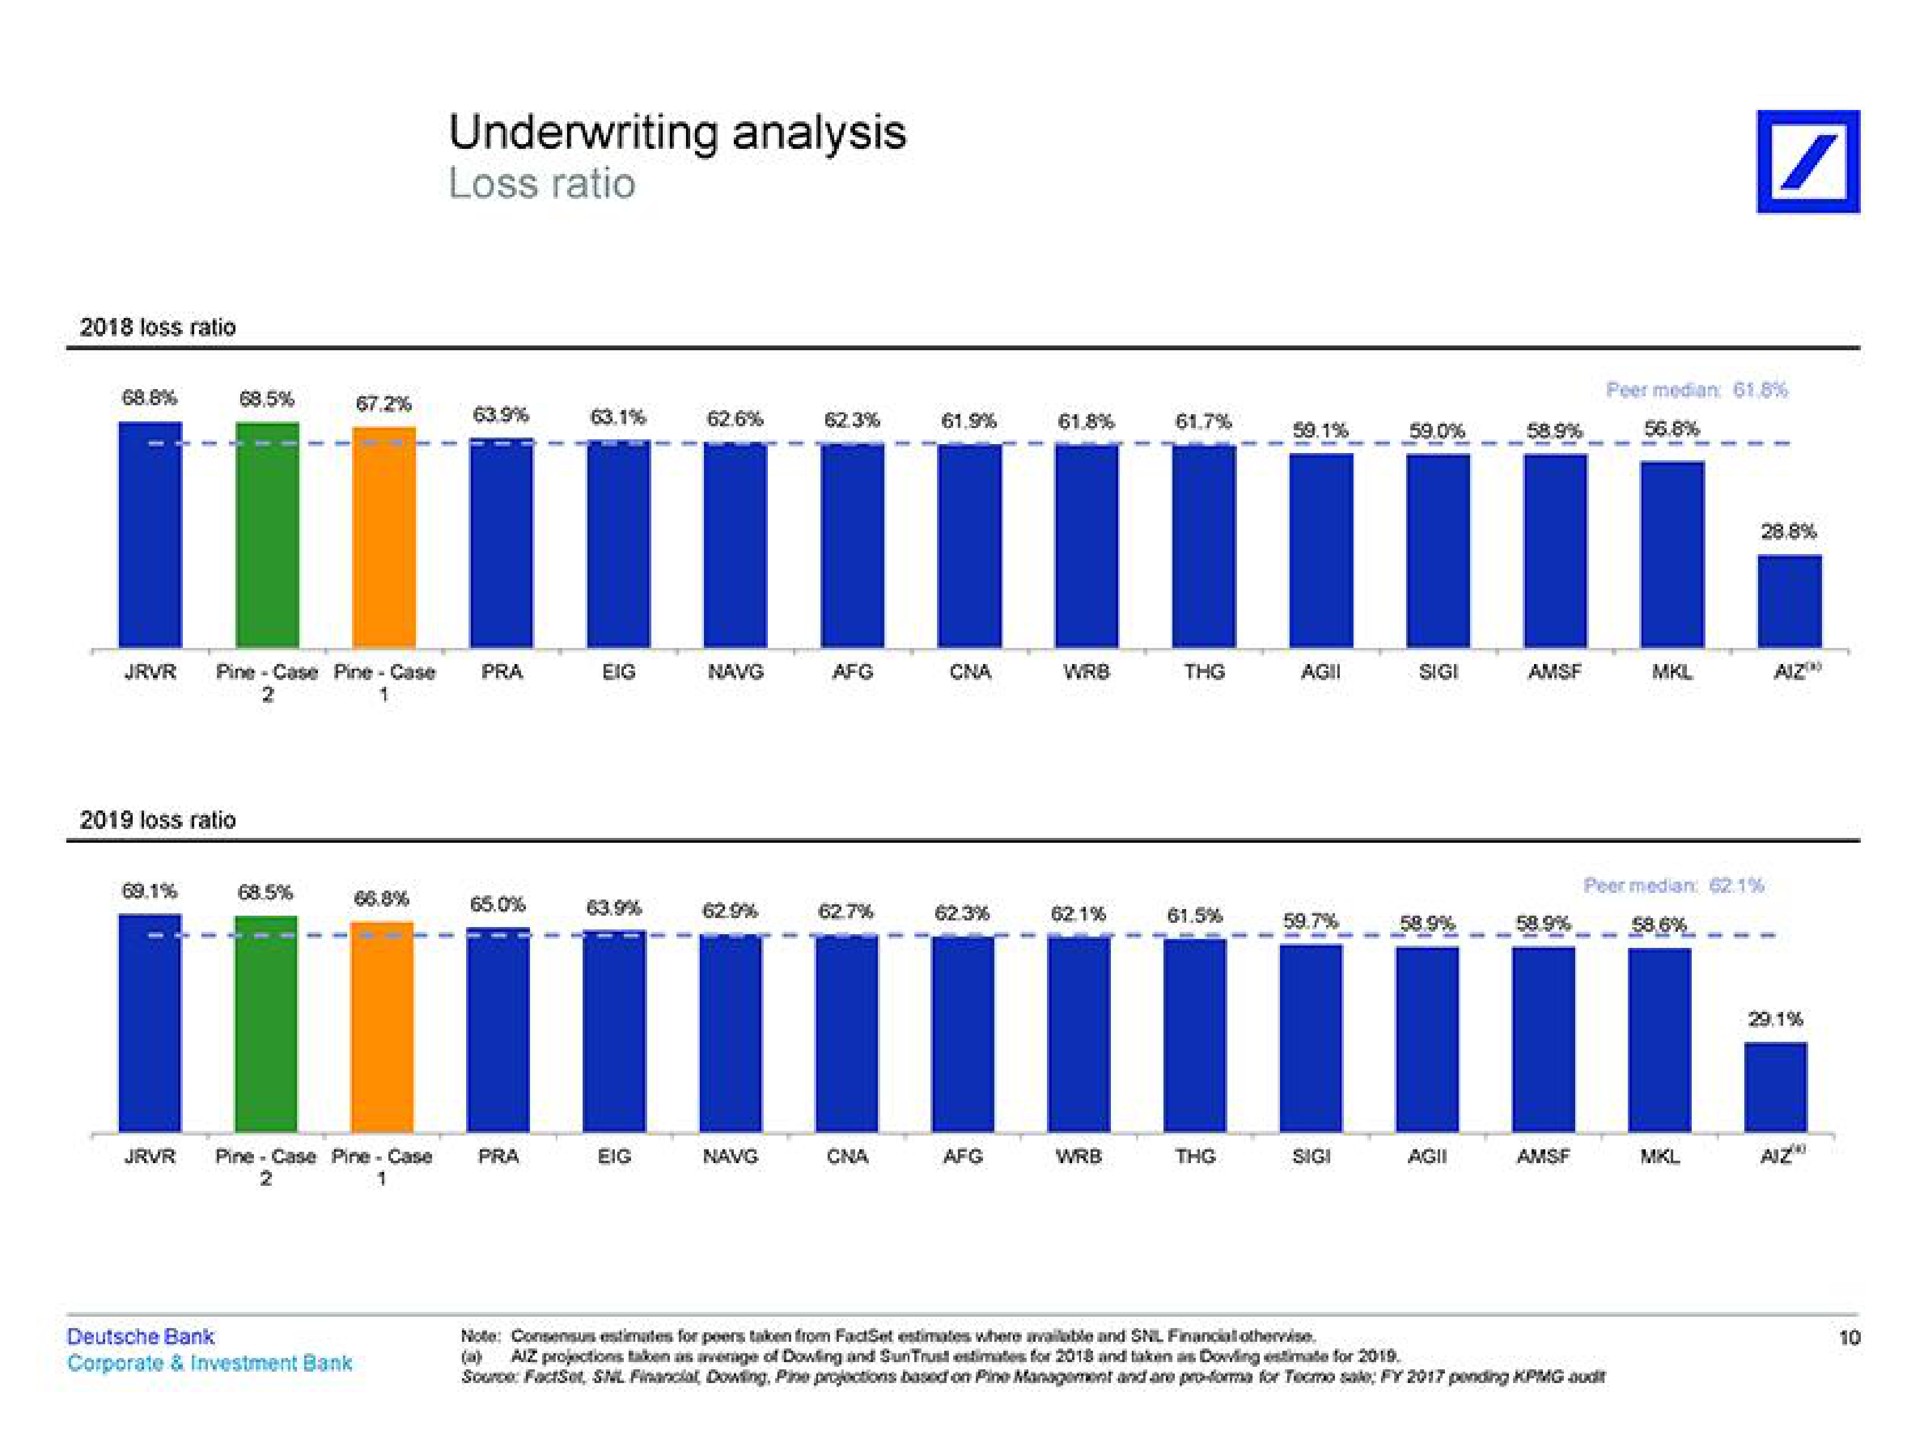 underwriting analysis loss ratio a a | Deutsche Bank